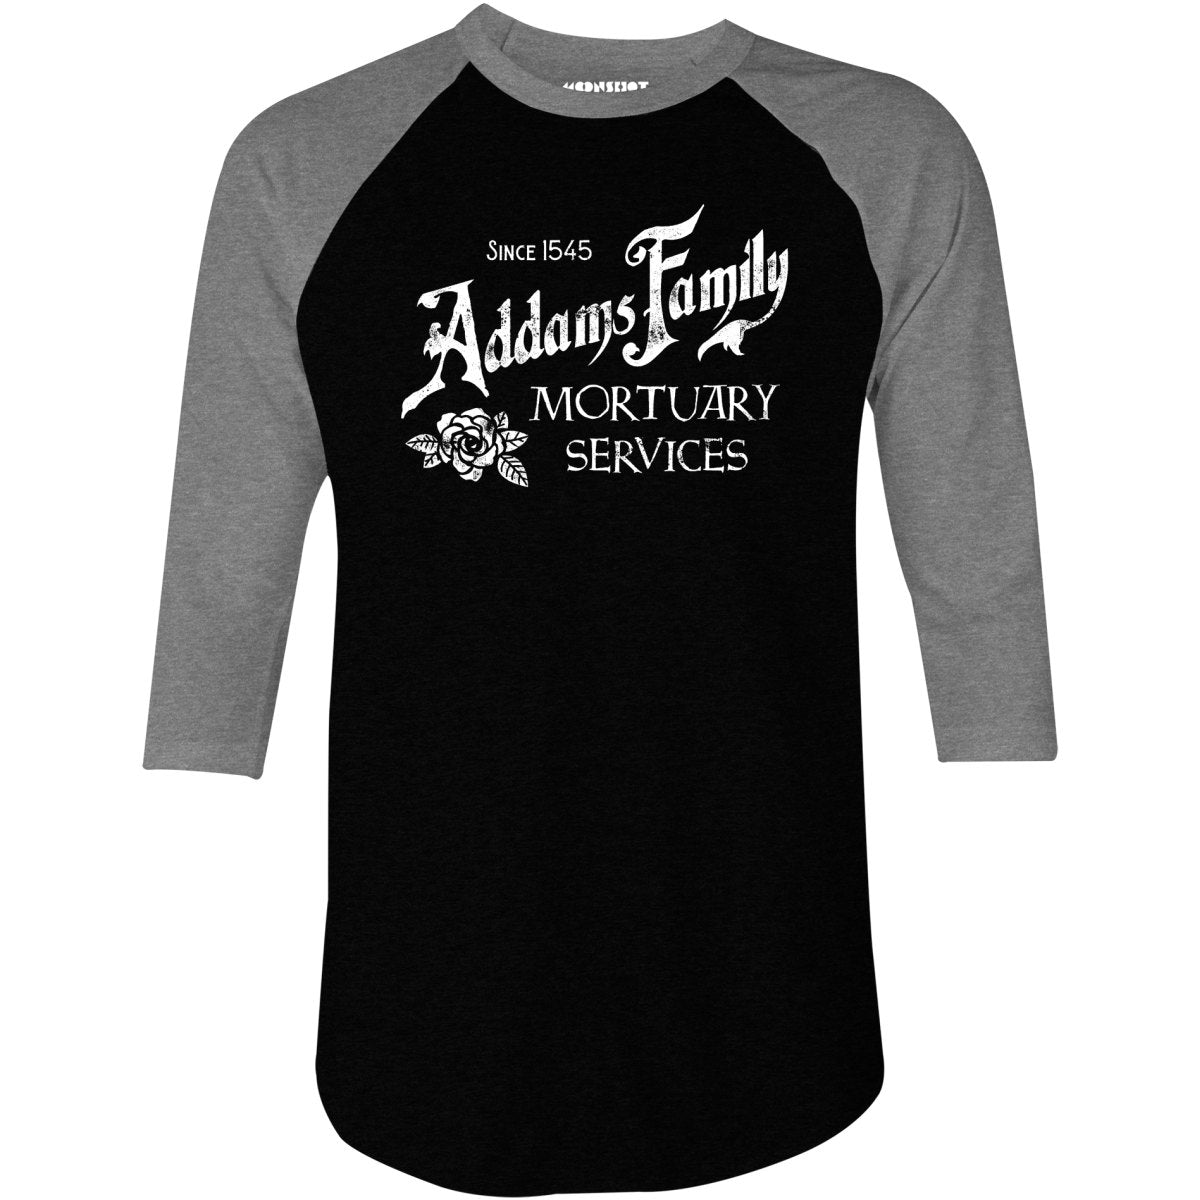 Addams Family Mortuary Services - 3/4 Sleeve Raglan T-Shirt